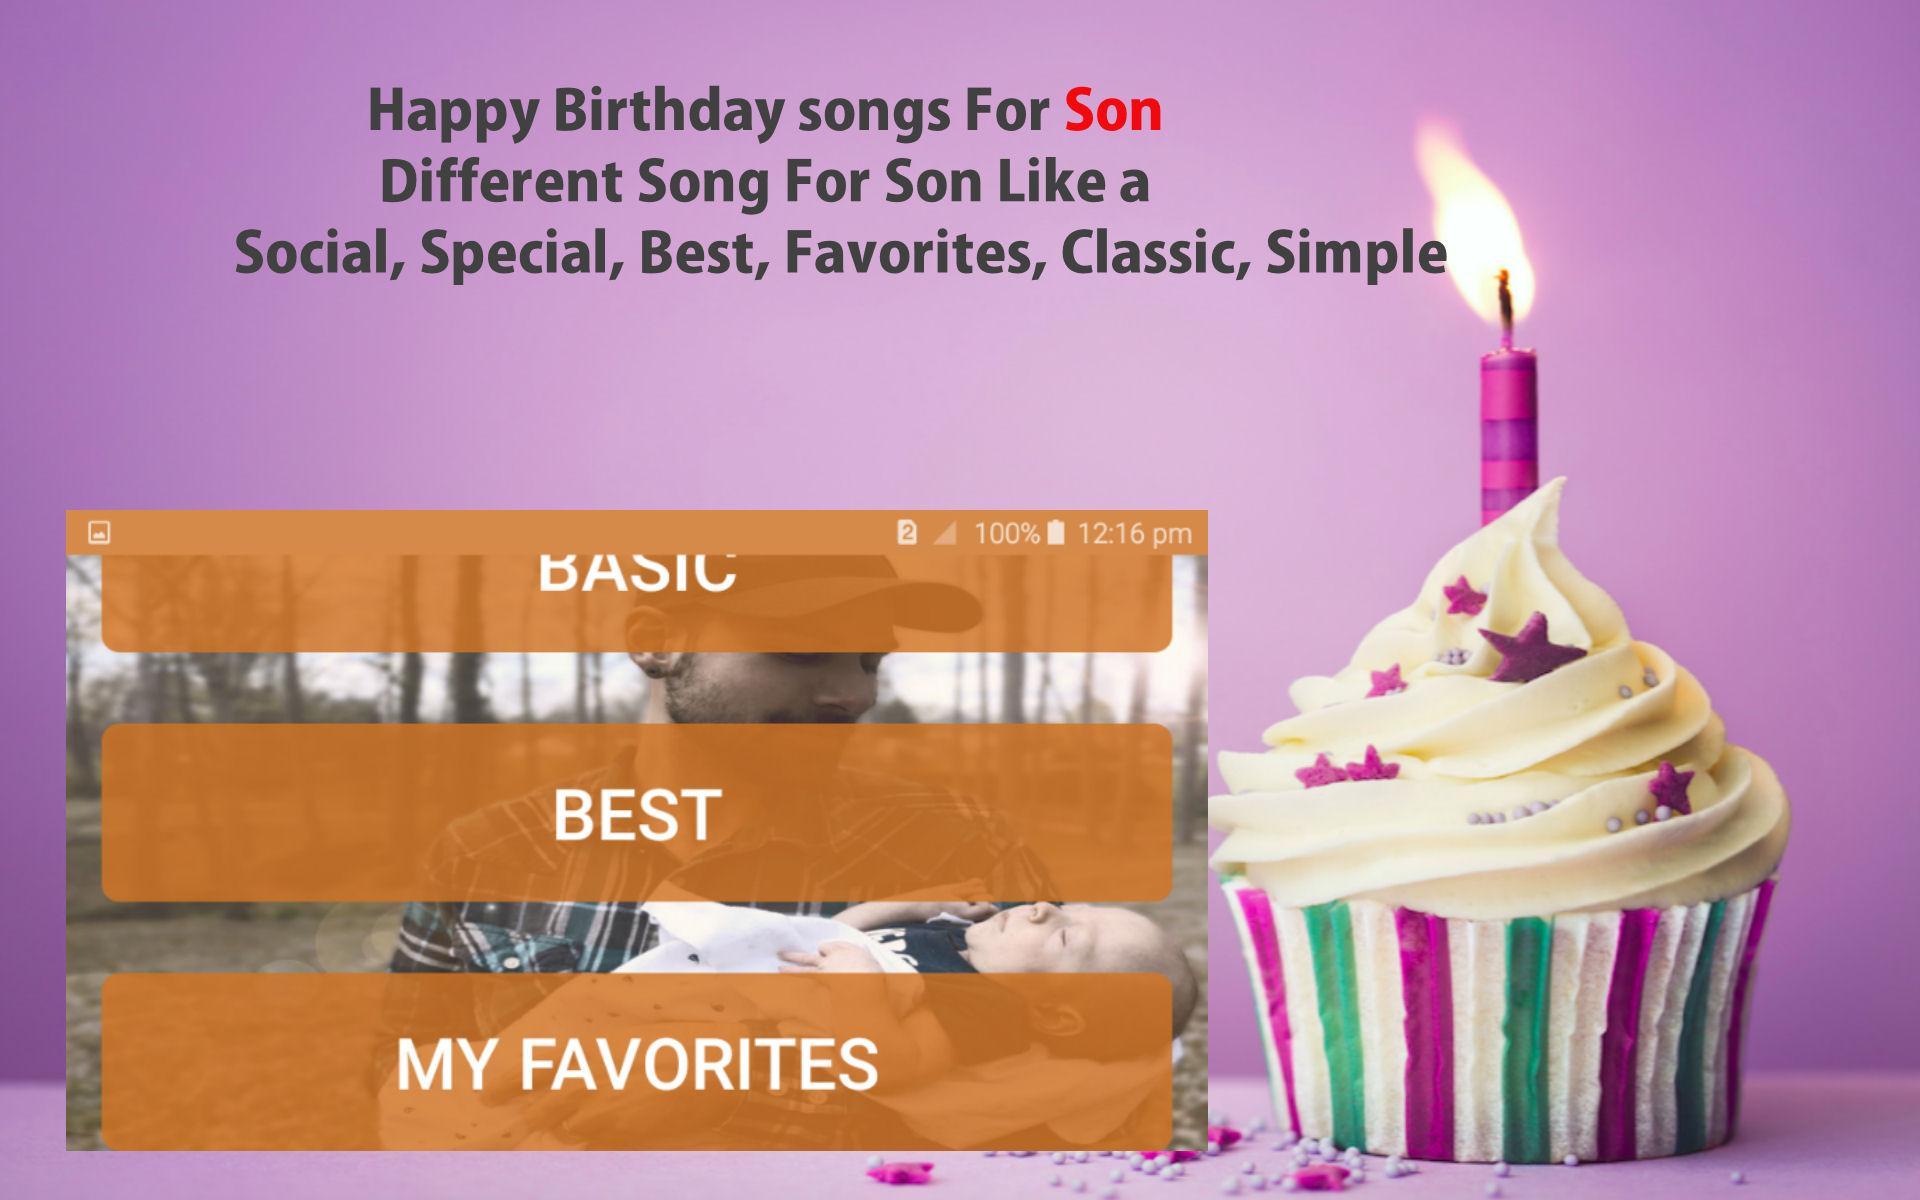 Happy Birthday песня. Happy Birthday с песней. Happy Birthday Song for son.